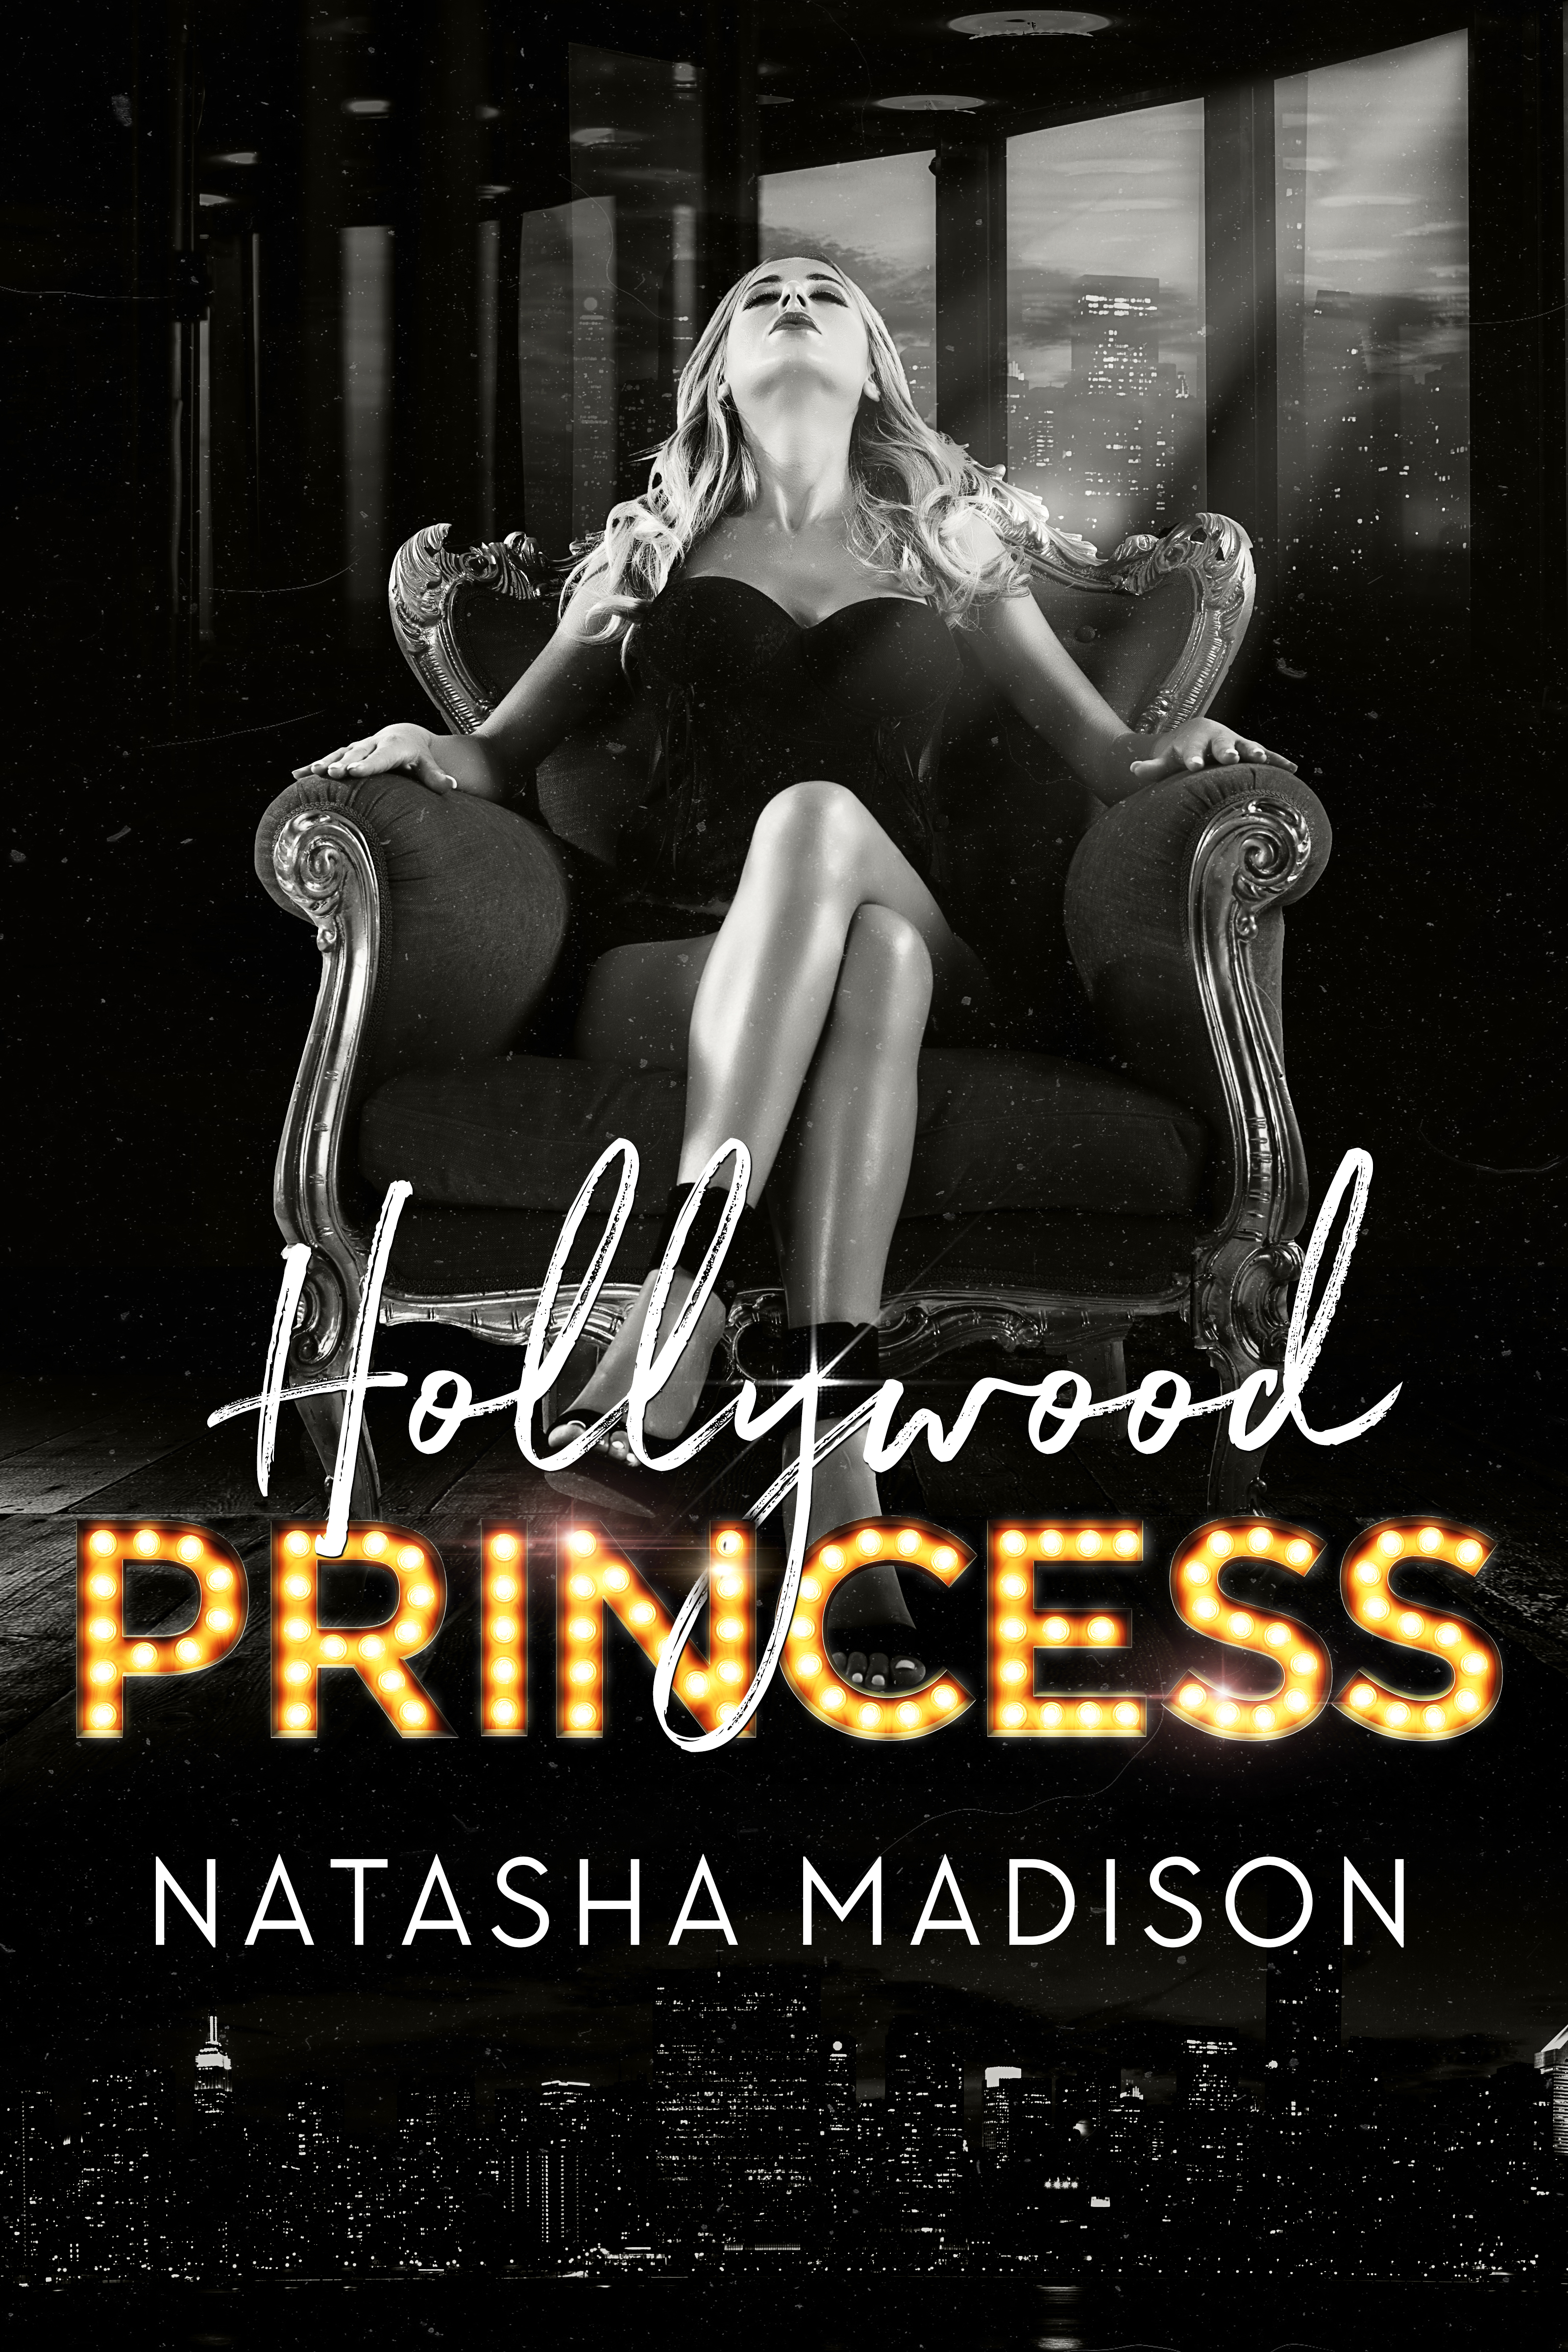 🎶 Hollywood Princess by Natasha Madison 🎶